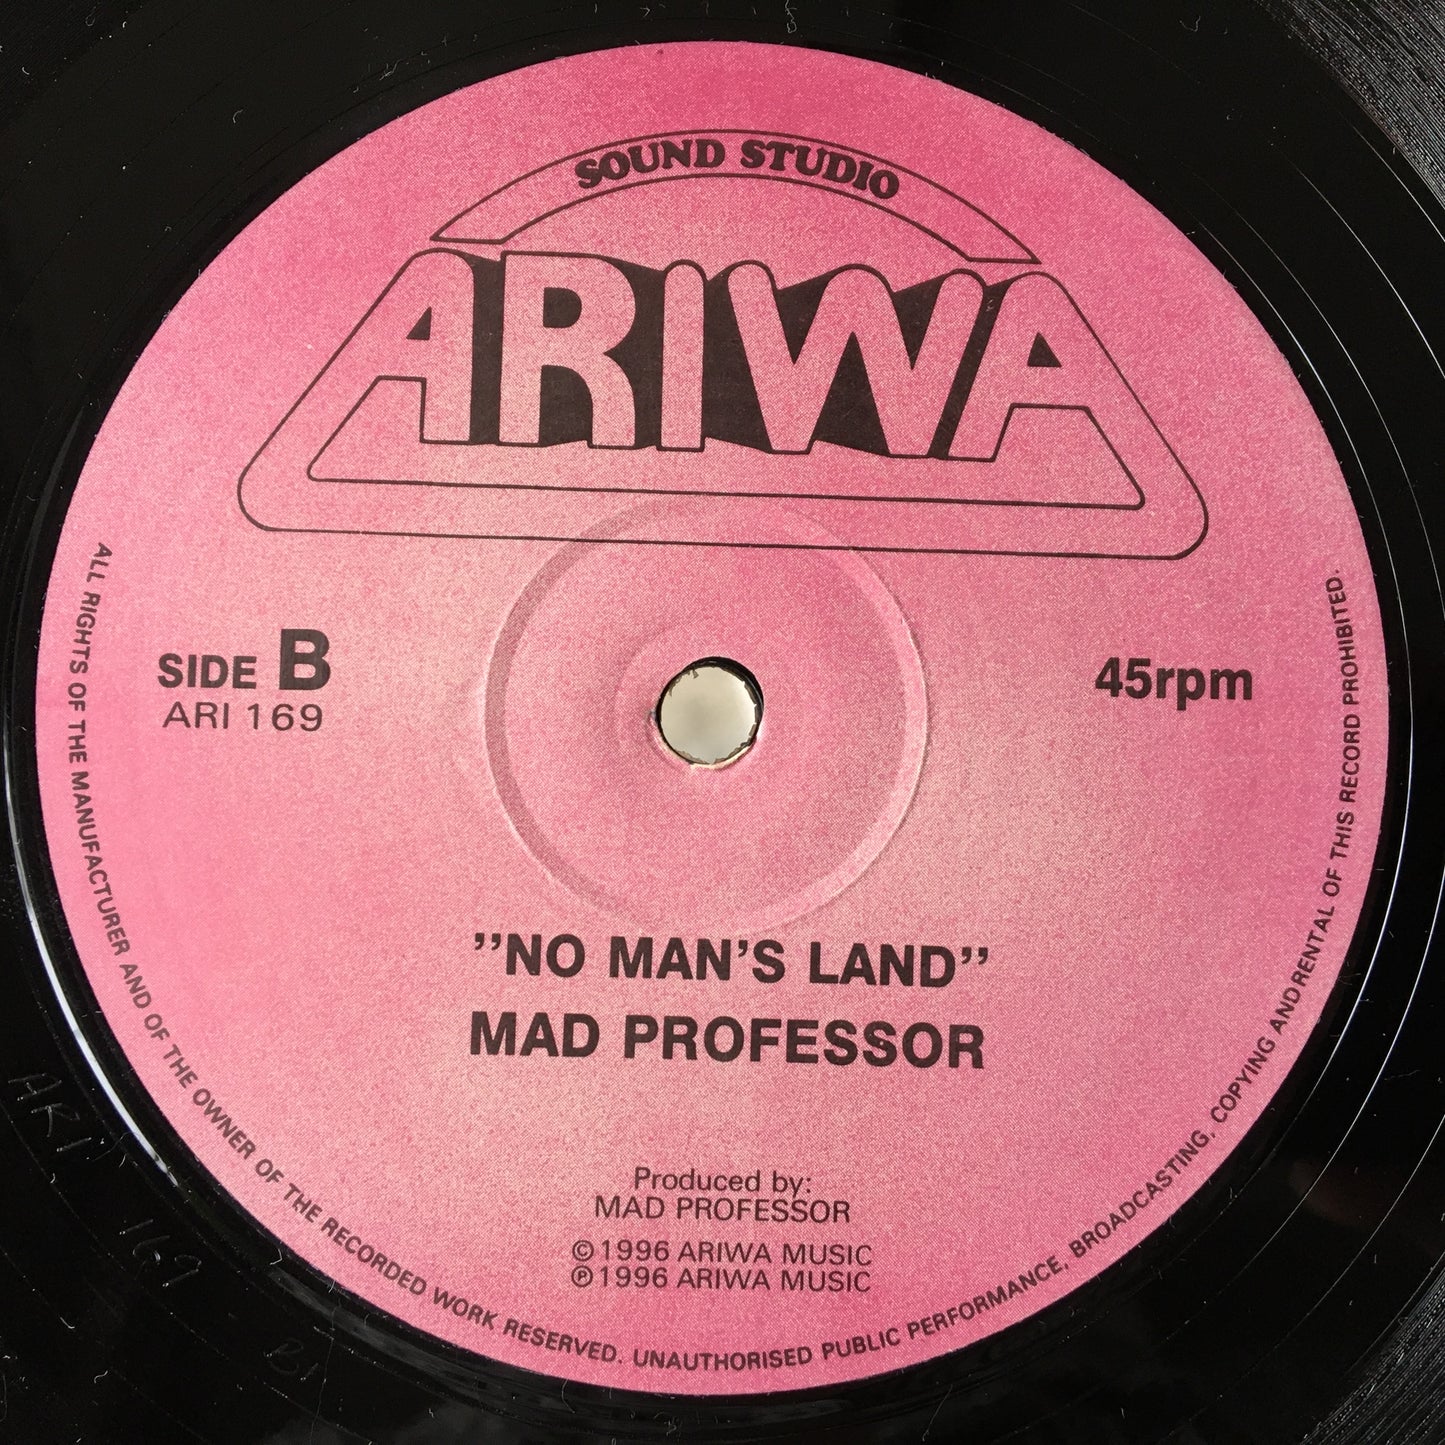 Black Majik / Mad Professor – Feeling's Killing Me / No Man's Land